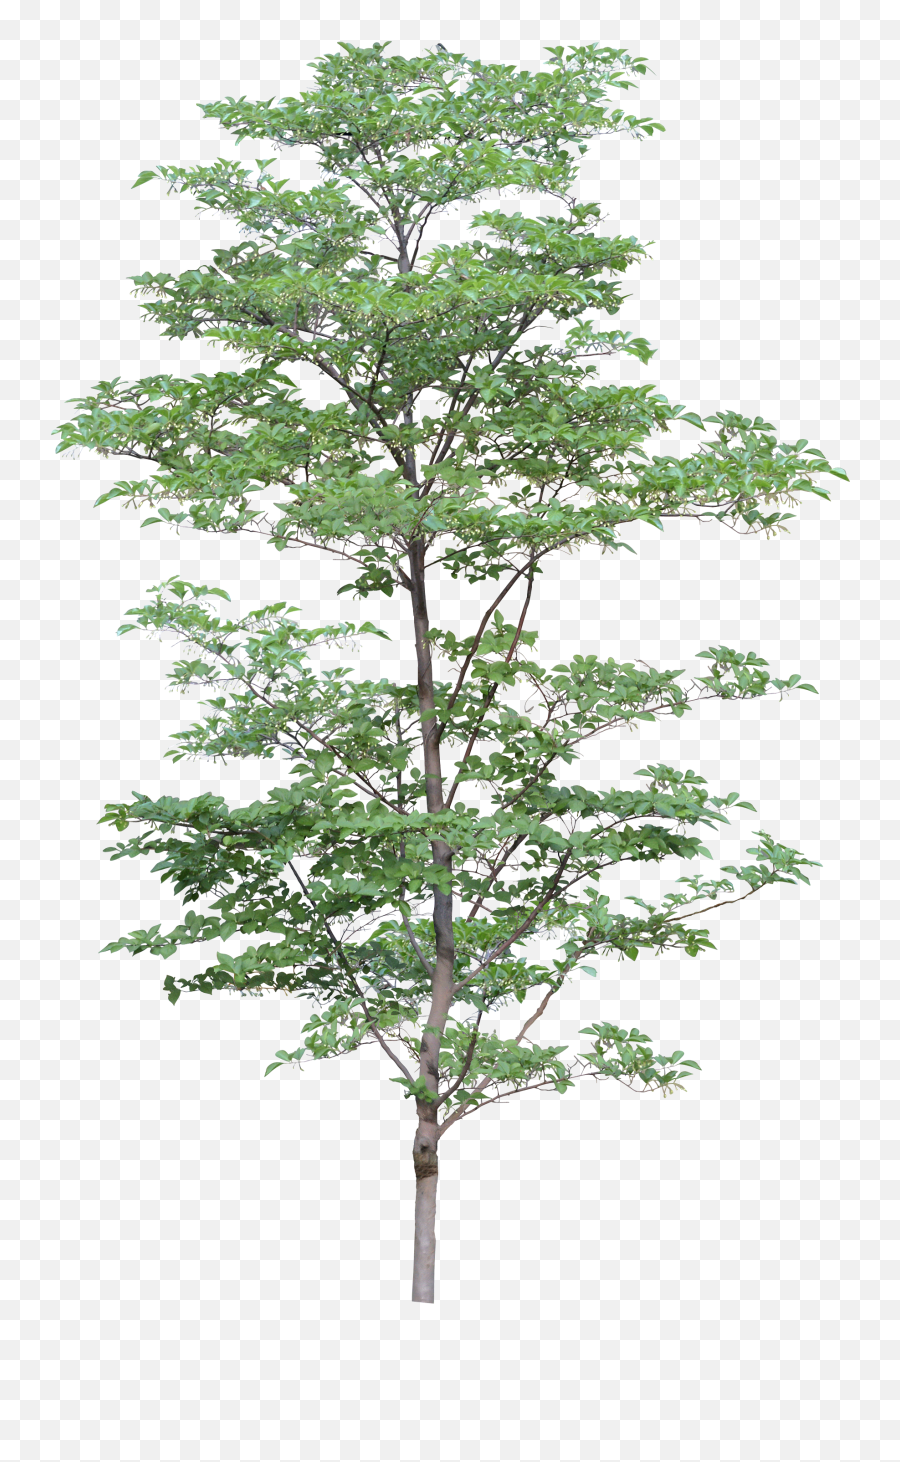 Tree Png Image - Transparent Background Png Format Trees Png,Trees Background Png